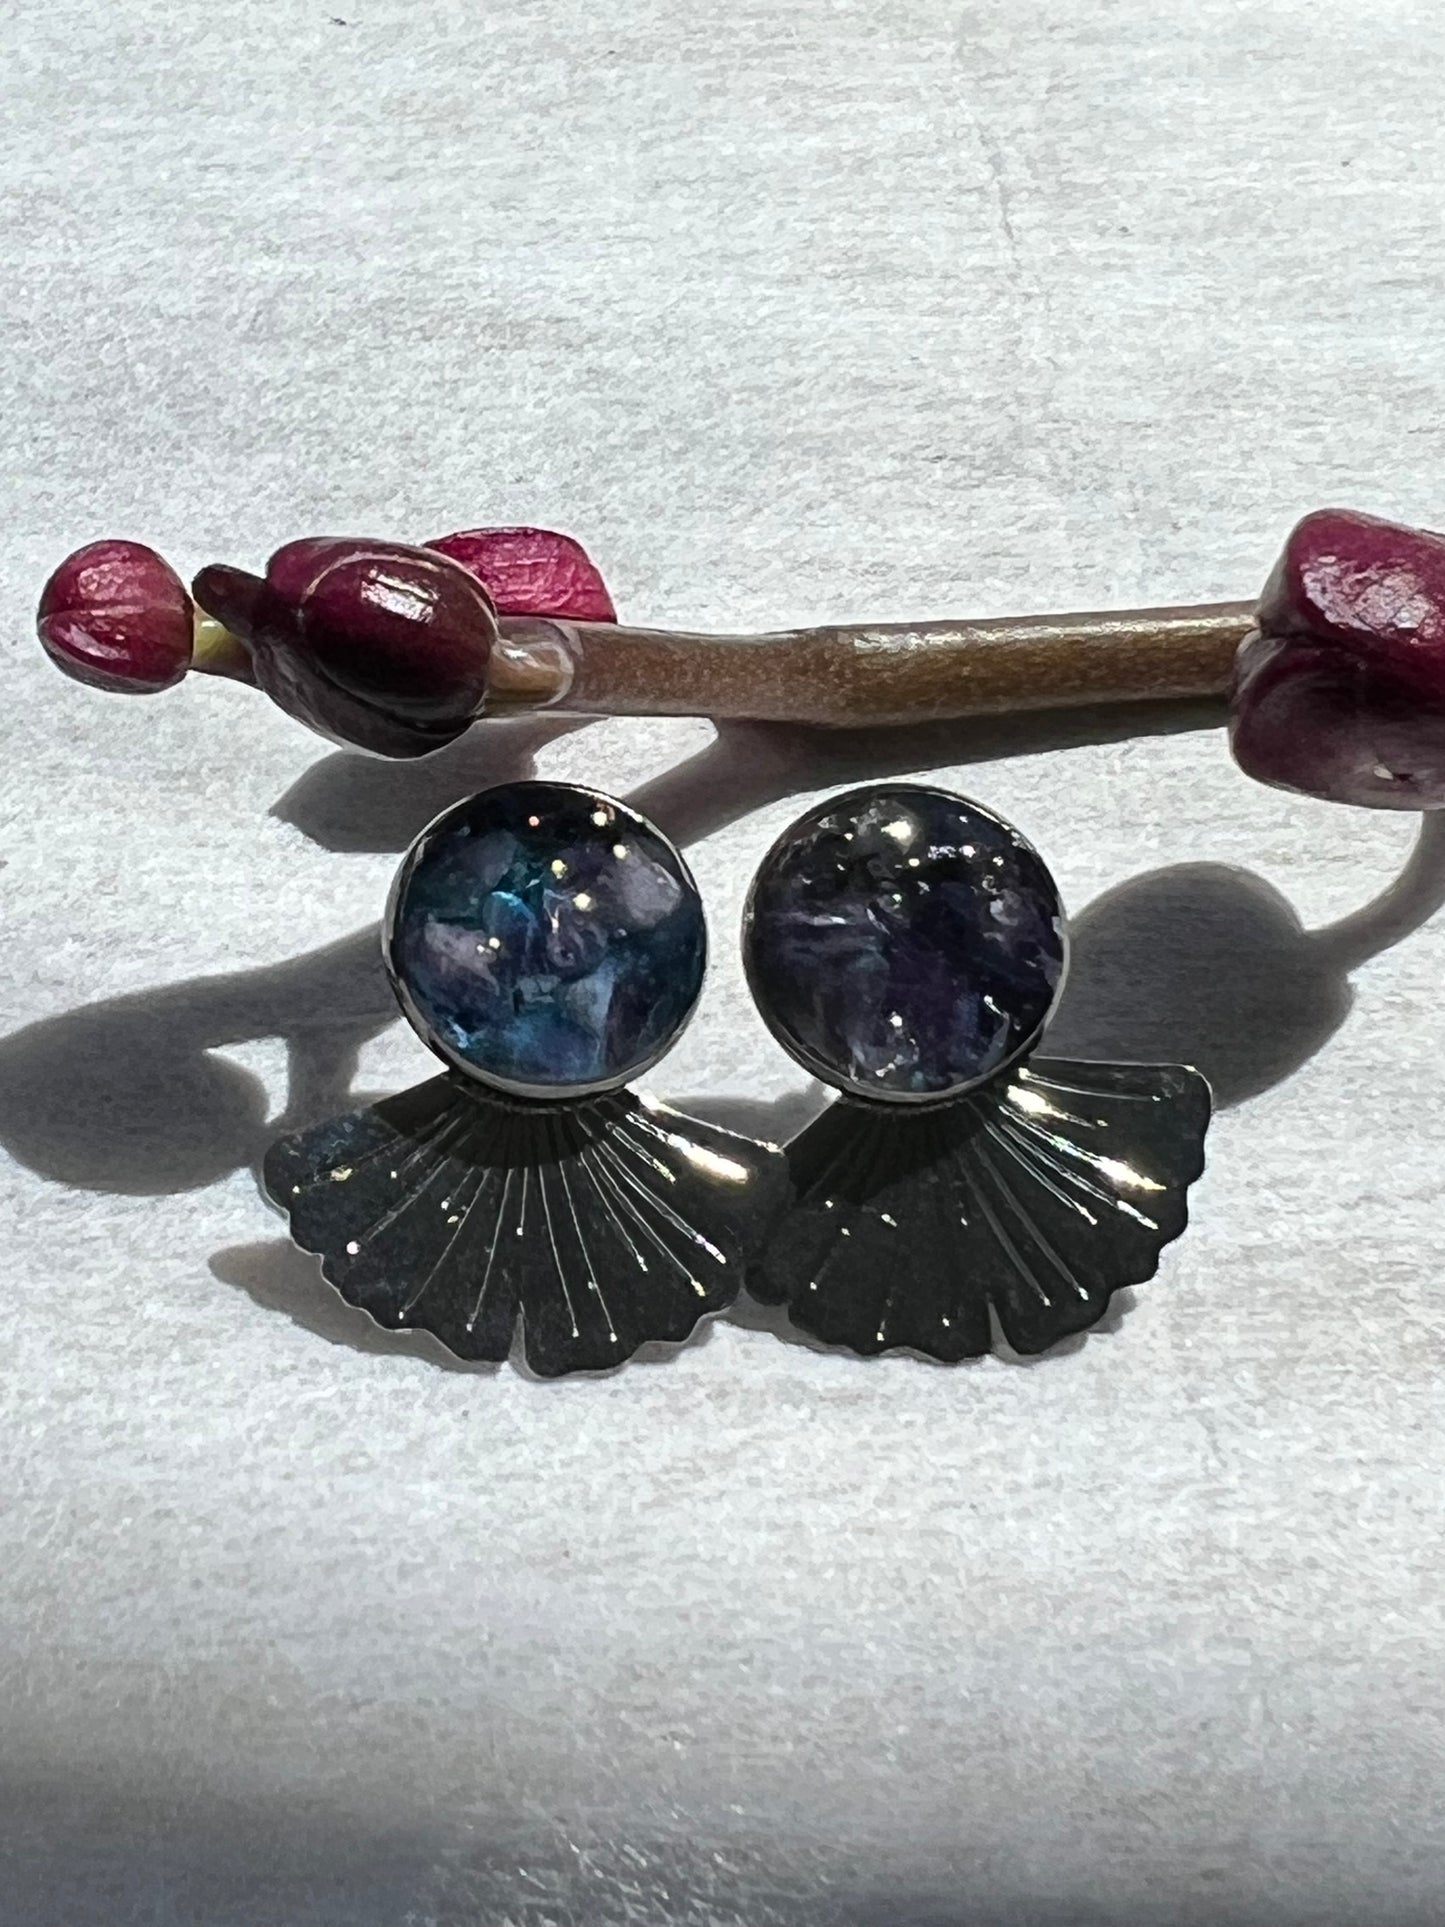 Amethyst in Resin Stud Earrings perfect gift, February stone